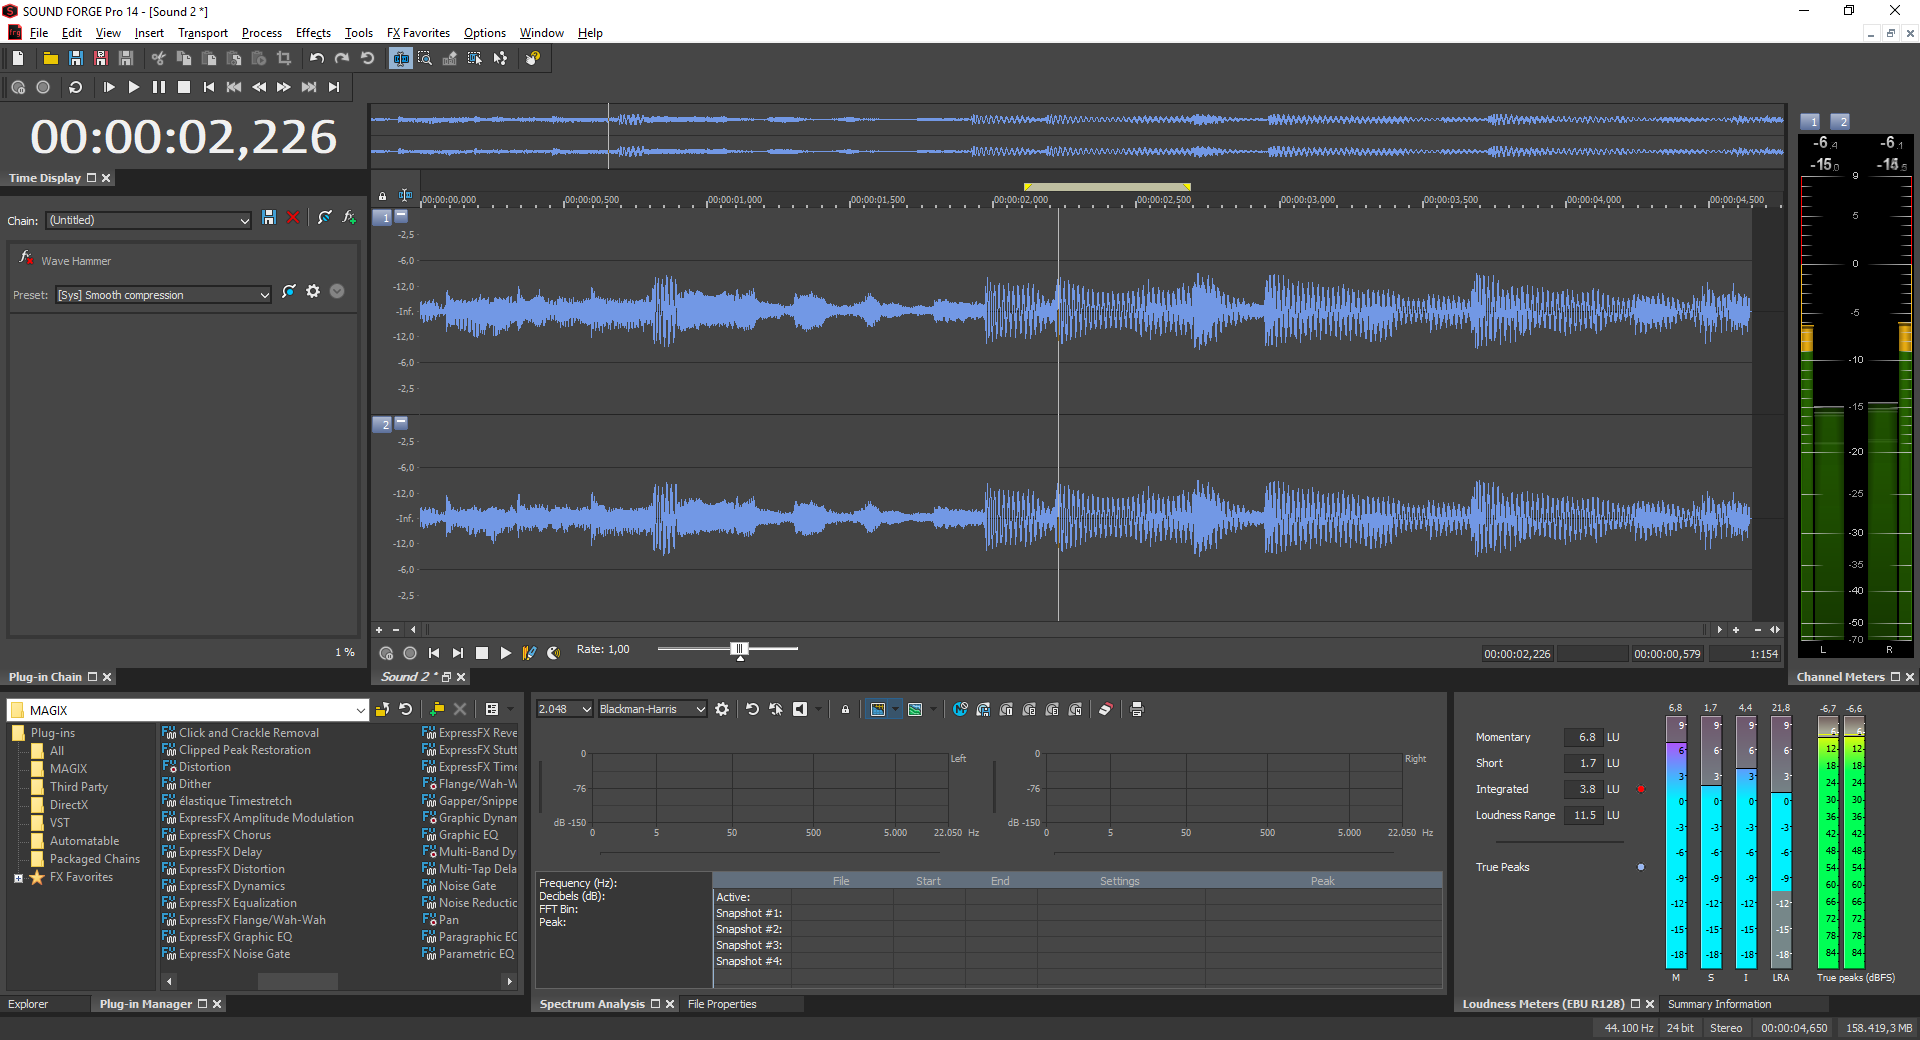 Sound Forge Pro by MAGIX - Audio Editor Plugin Host VST VST3